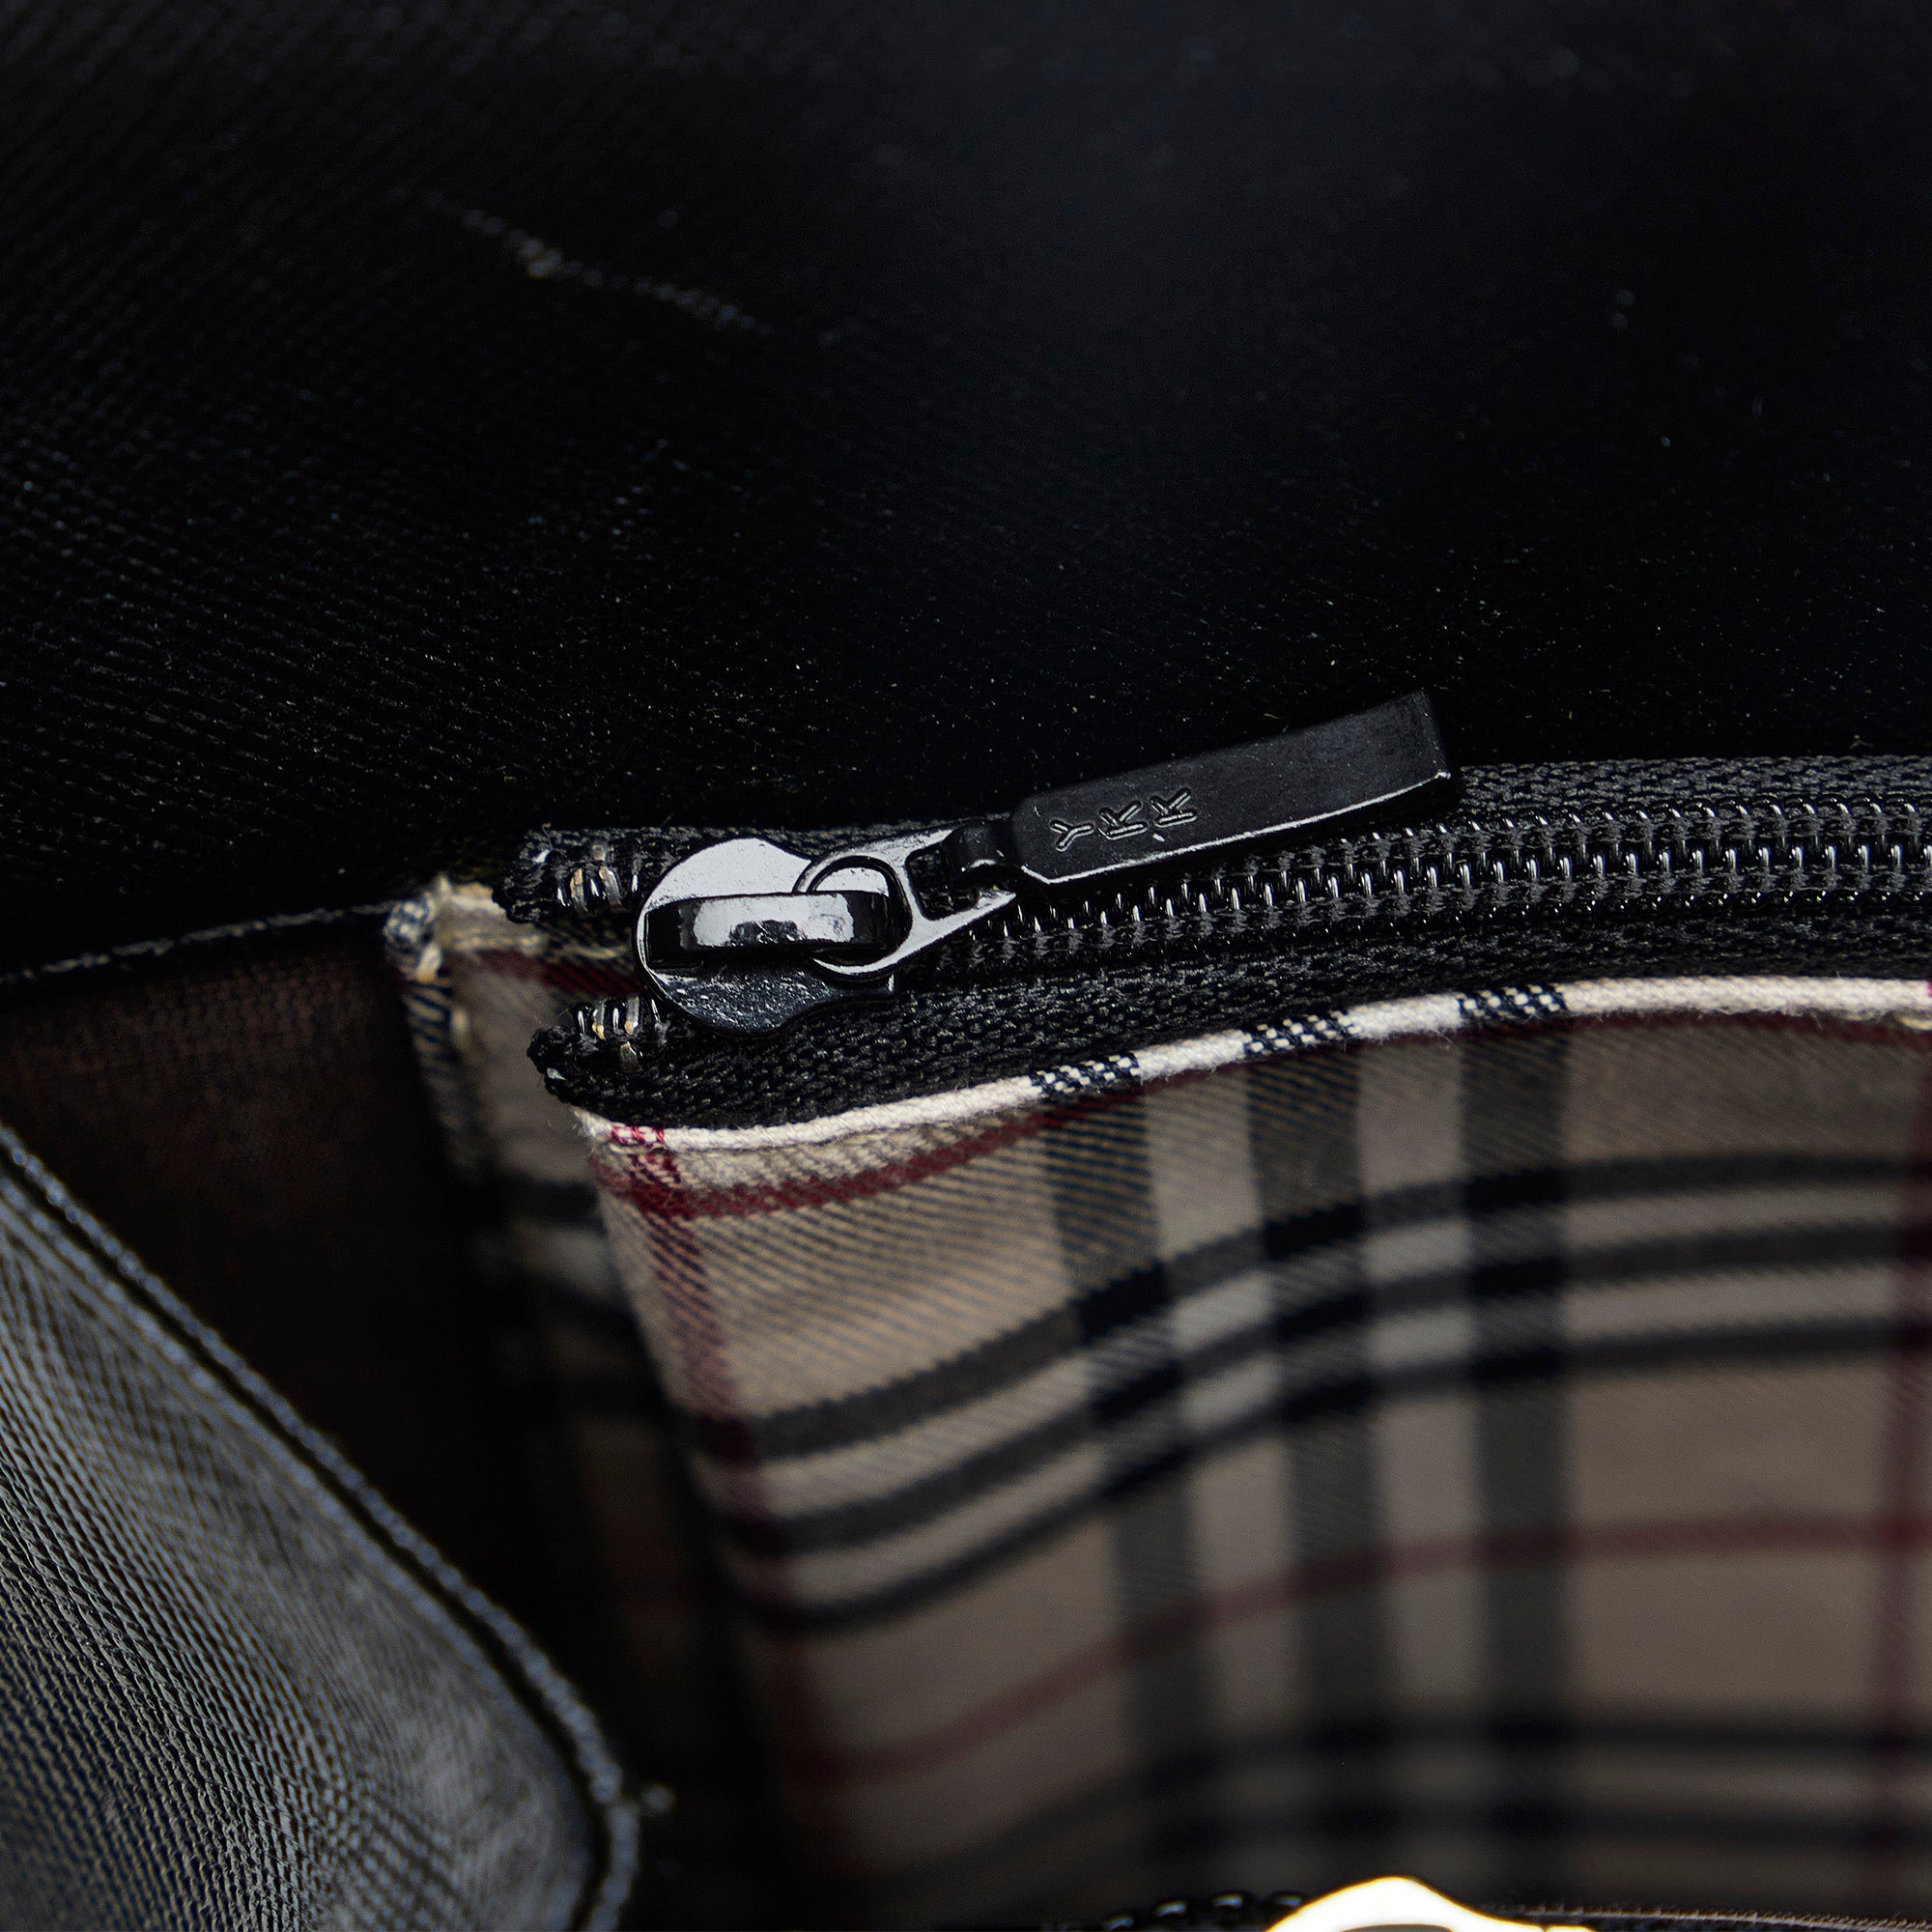 Black Burberry Leather Handbag – Designer Revival